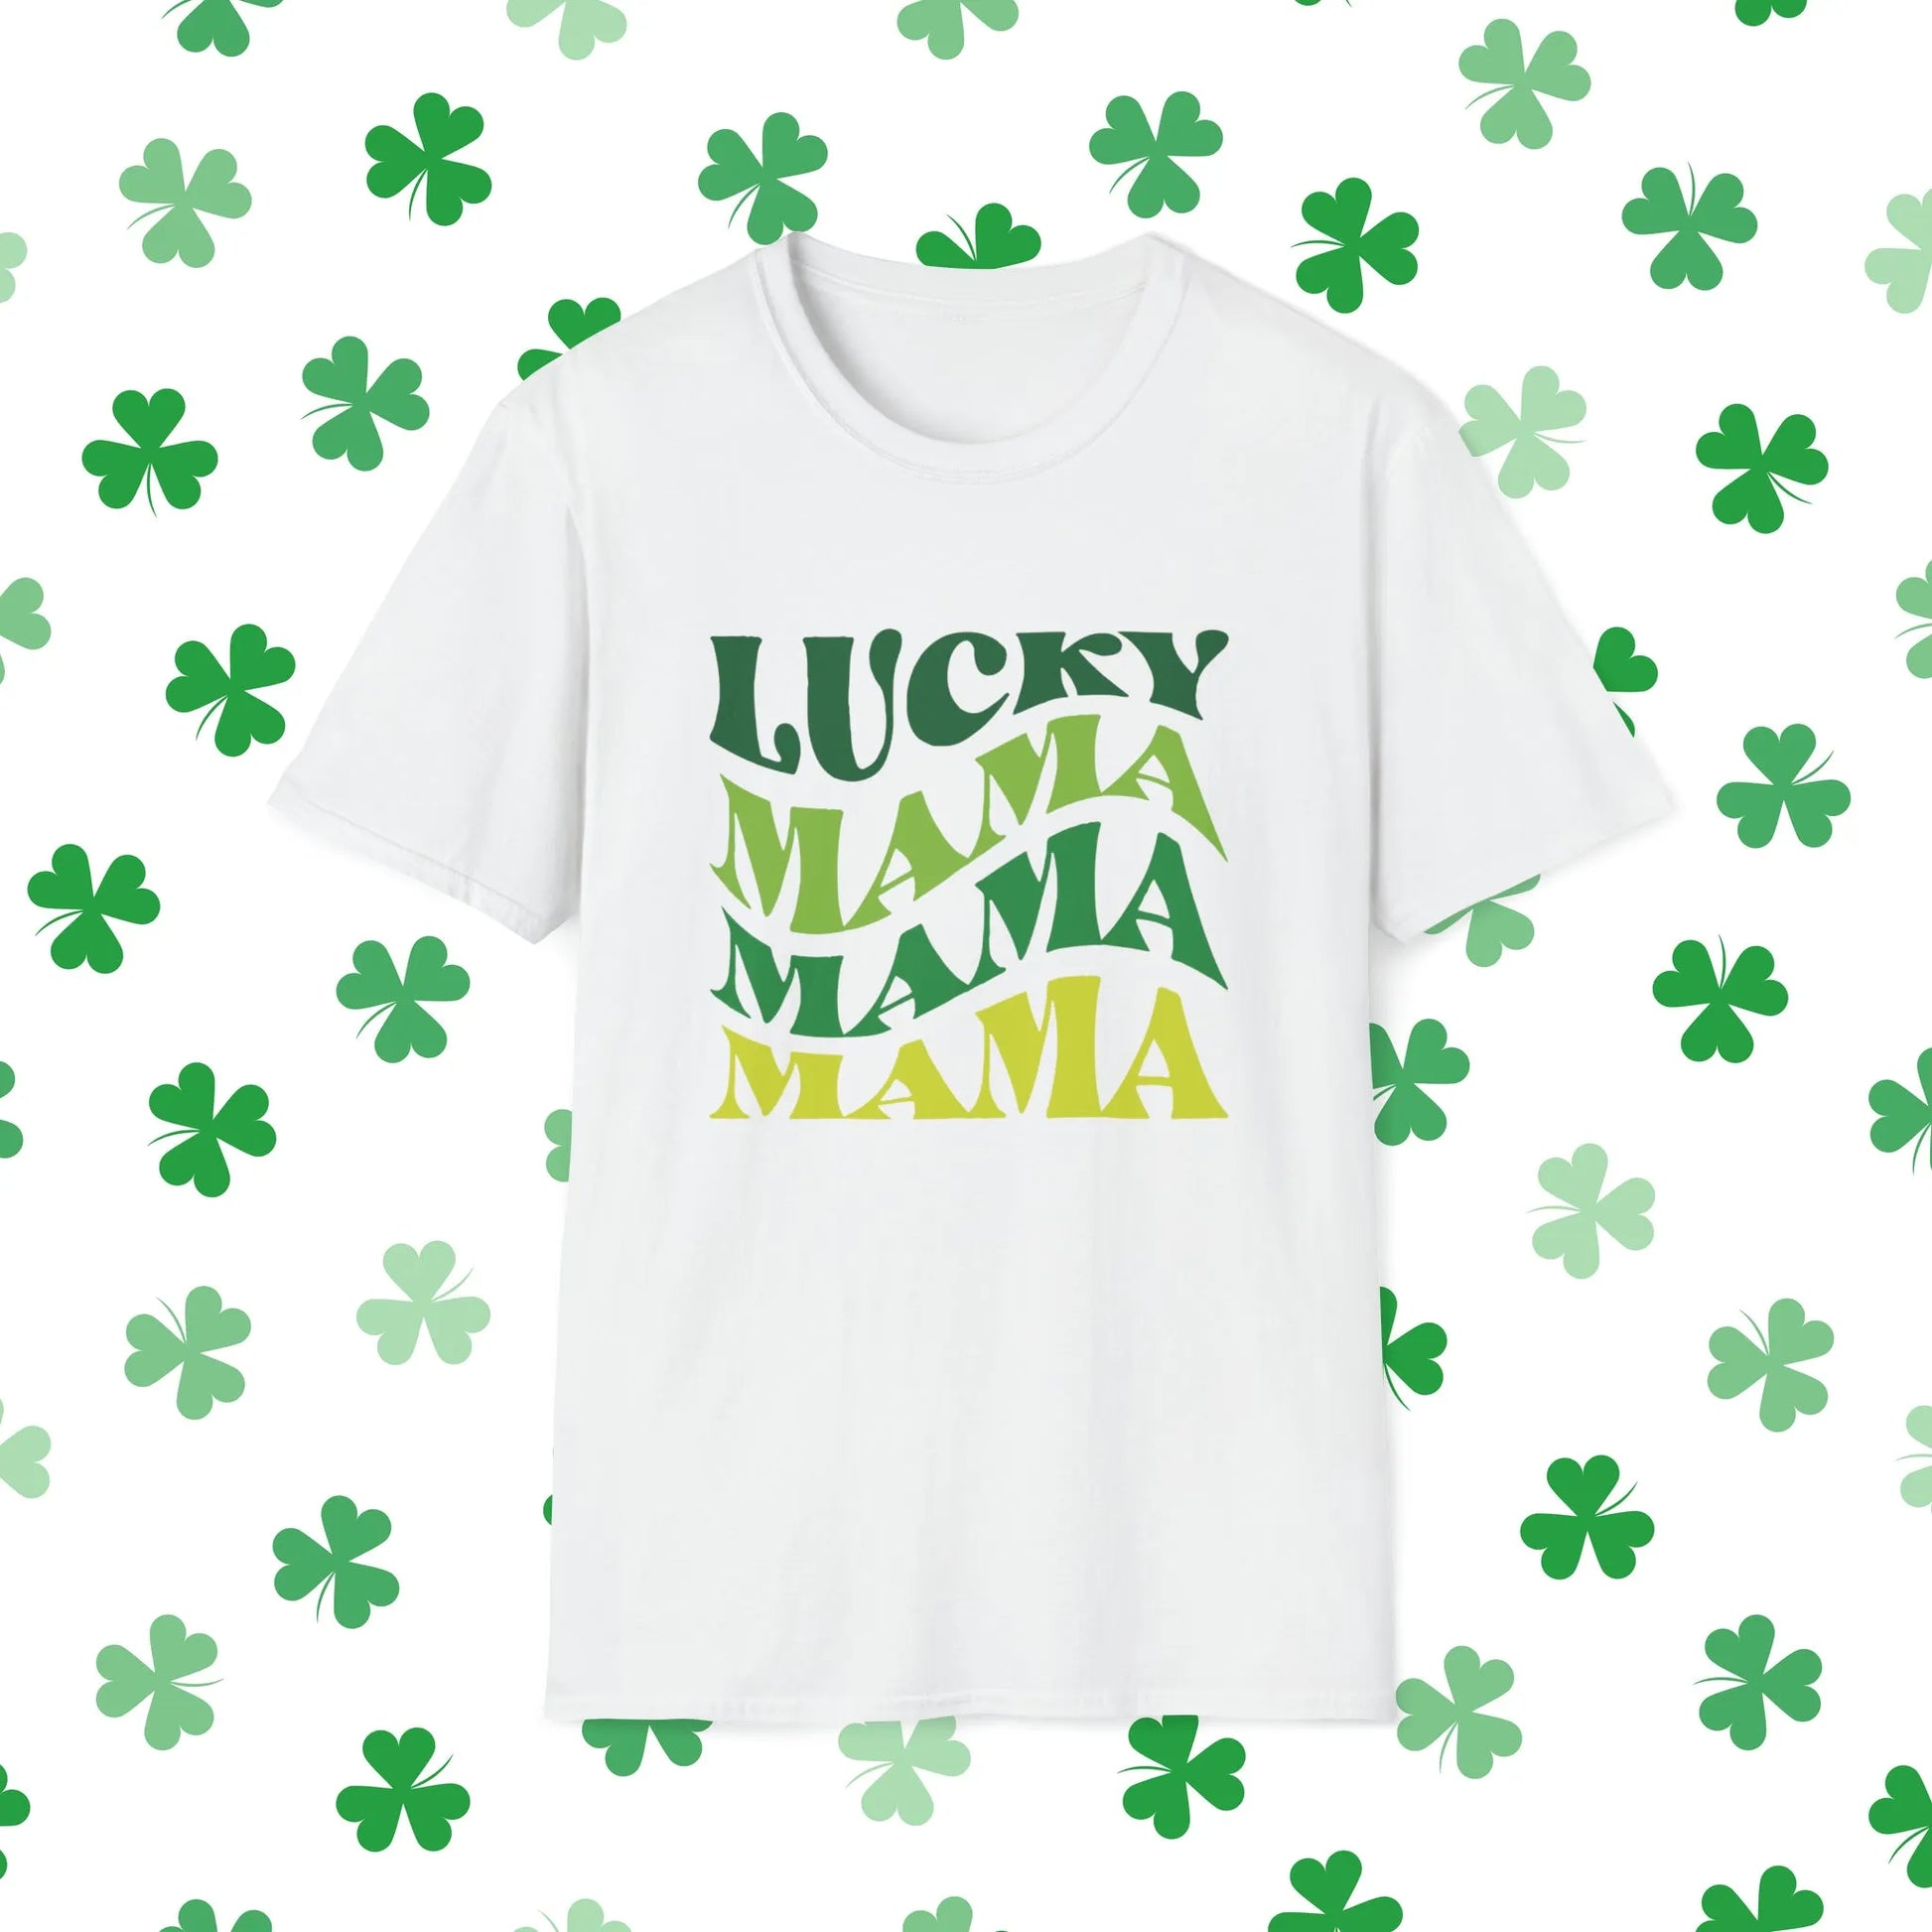 Lucky Mama Mama Mama Retro-Style St. Patrick's Day T-Shirt - Comfort & Charm - St. Patrick's Day Mom Shirt White